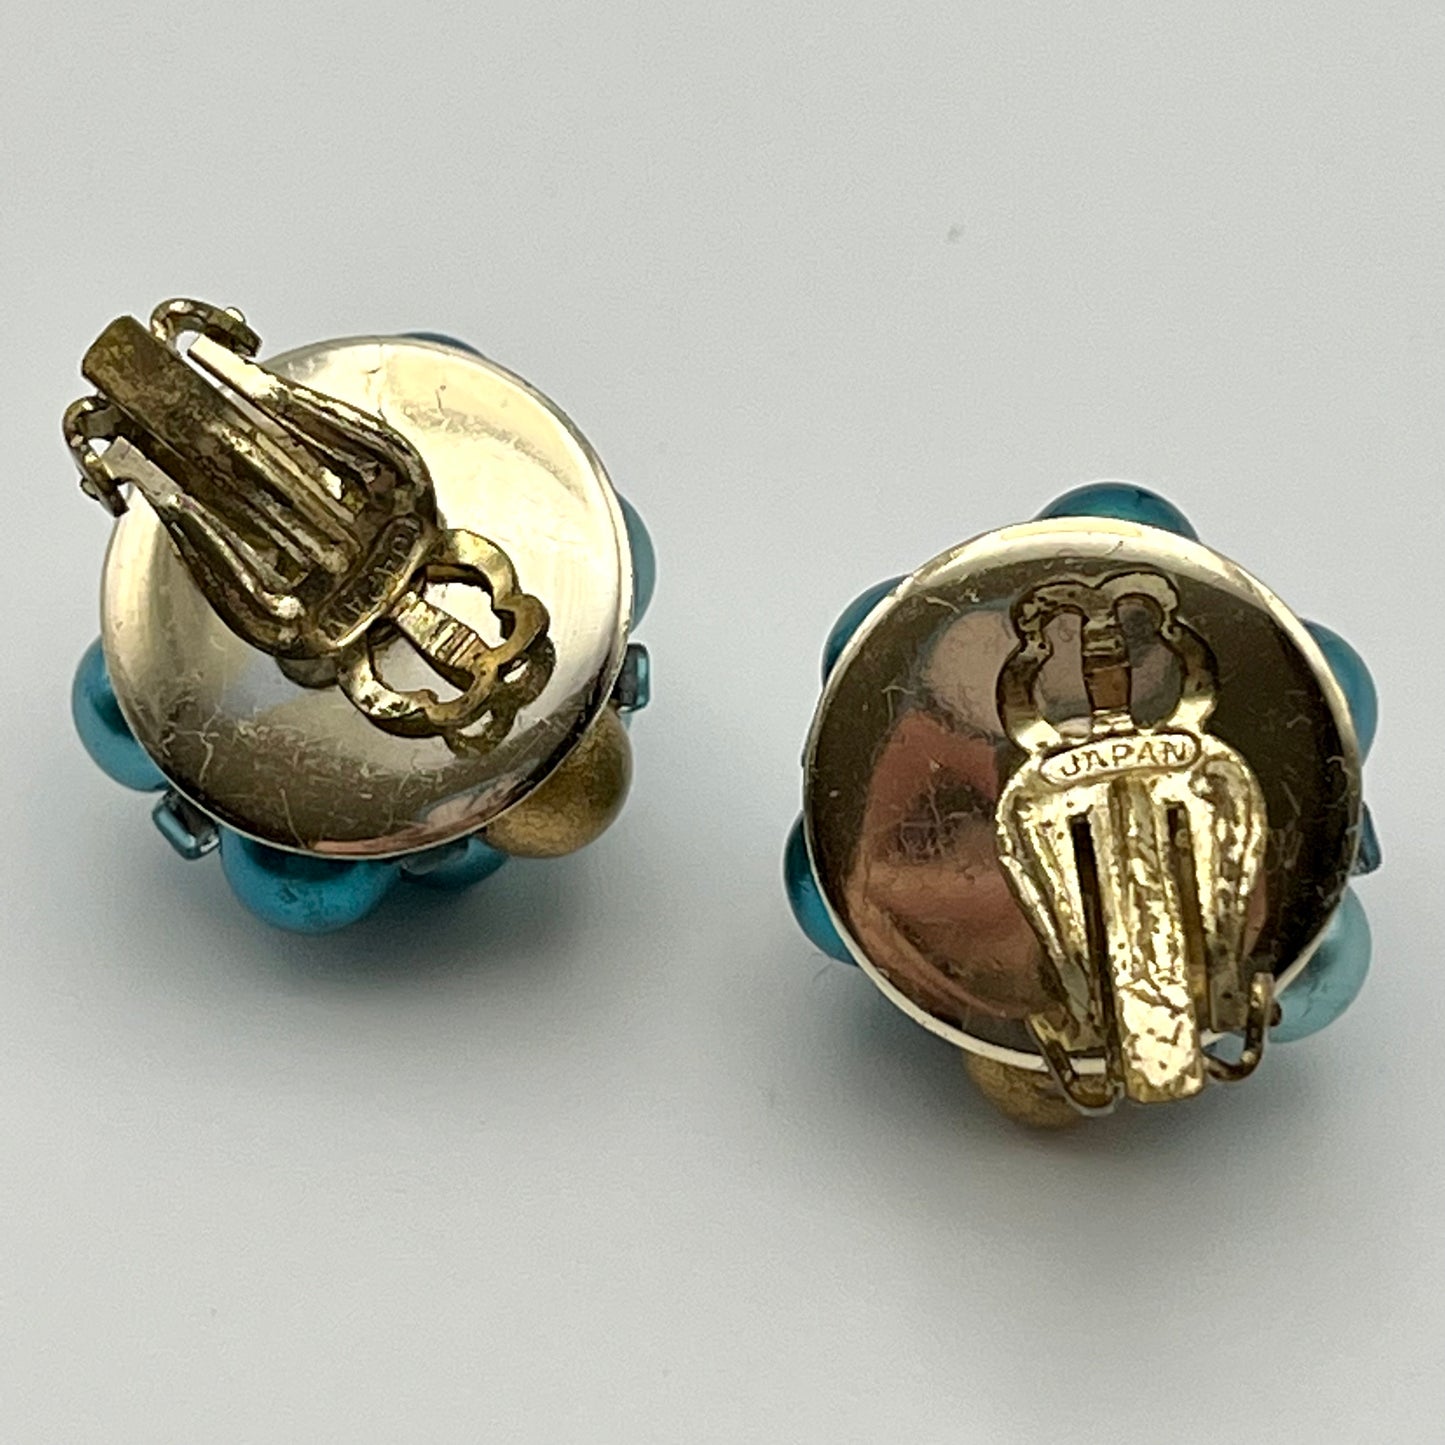 1960s Japan Bead Earrings